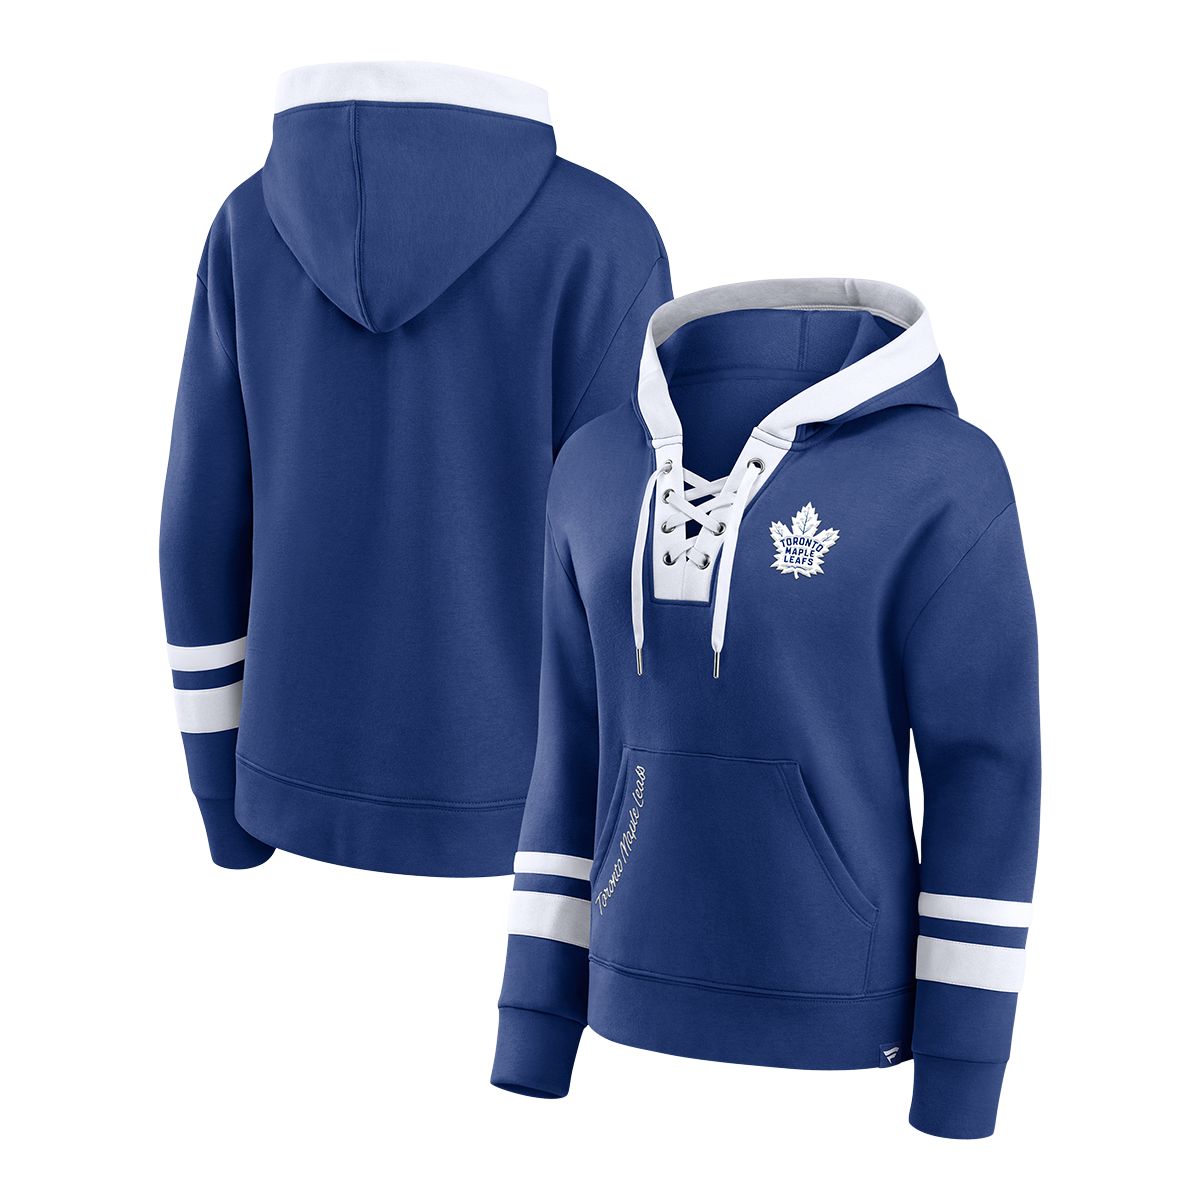 Toronto Maple Leafs x Drew hoodie On Sale